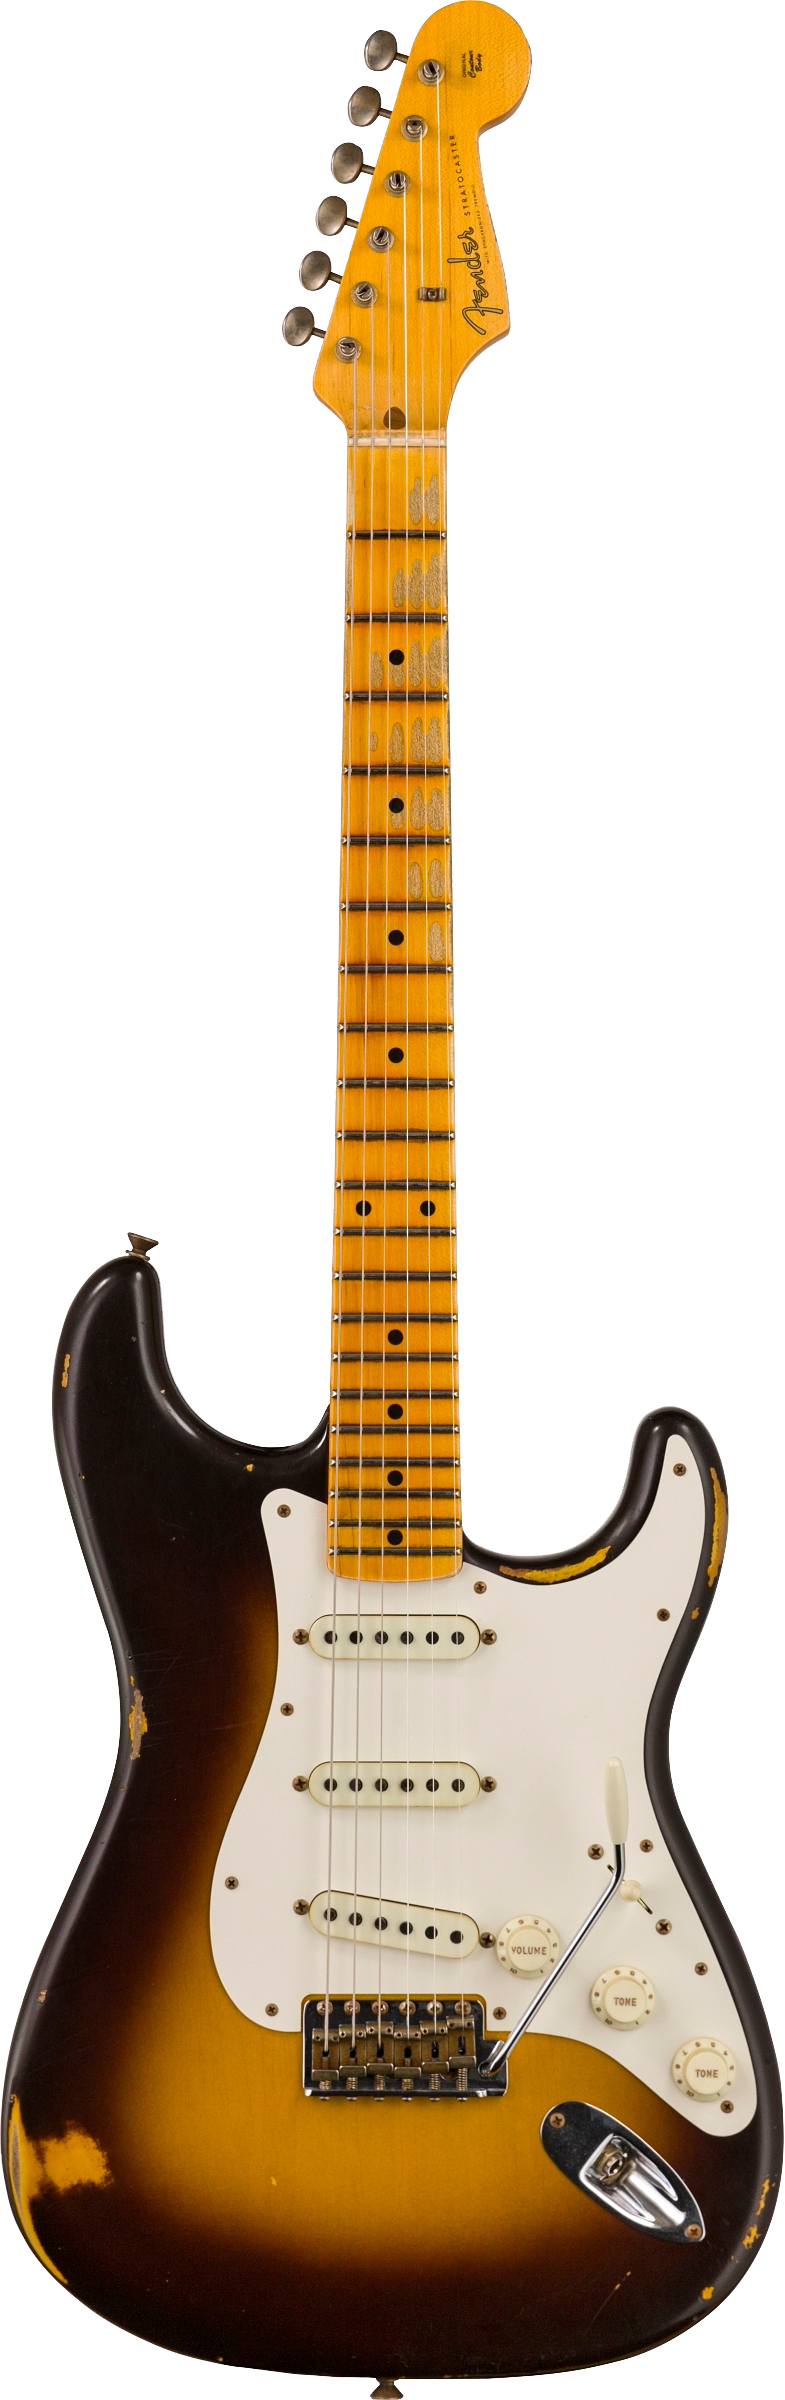 Fender Custom Shop Limited Edition Fat 50s Strat - Relic Wide-Fade Chocolate 2-color Sunburst